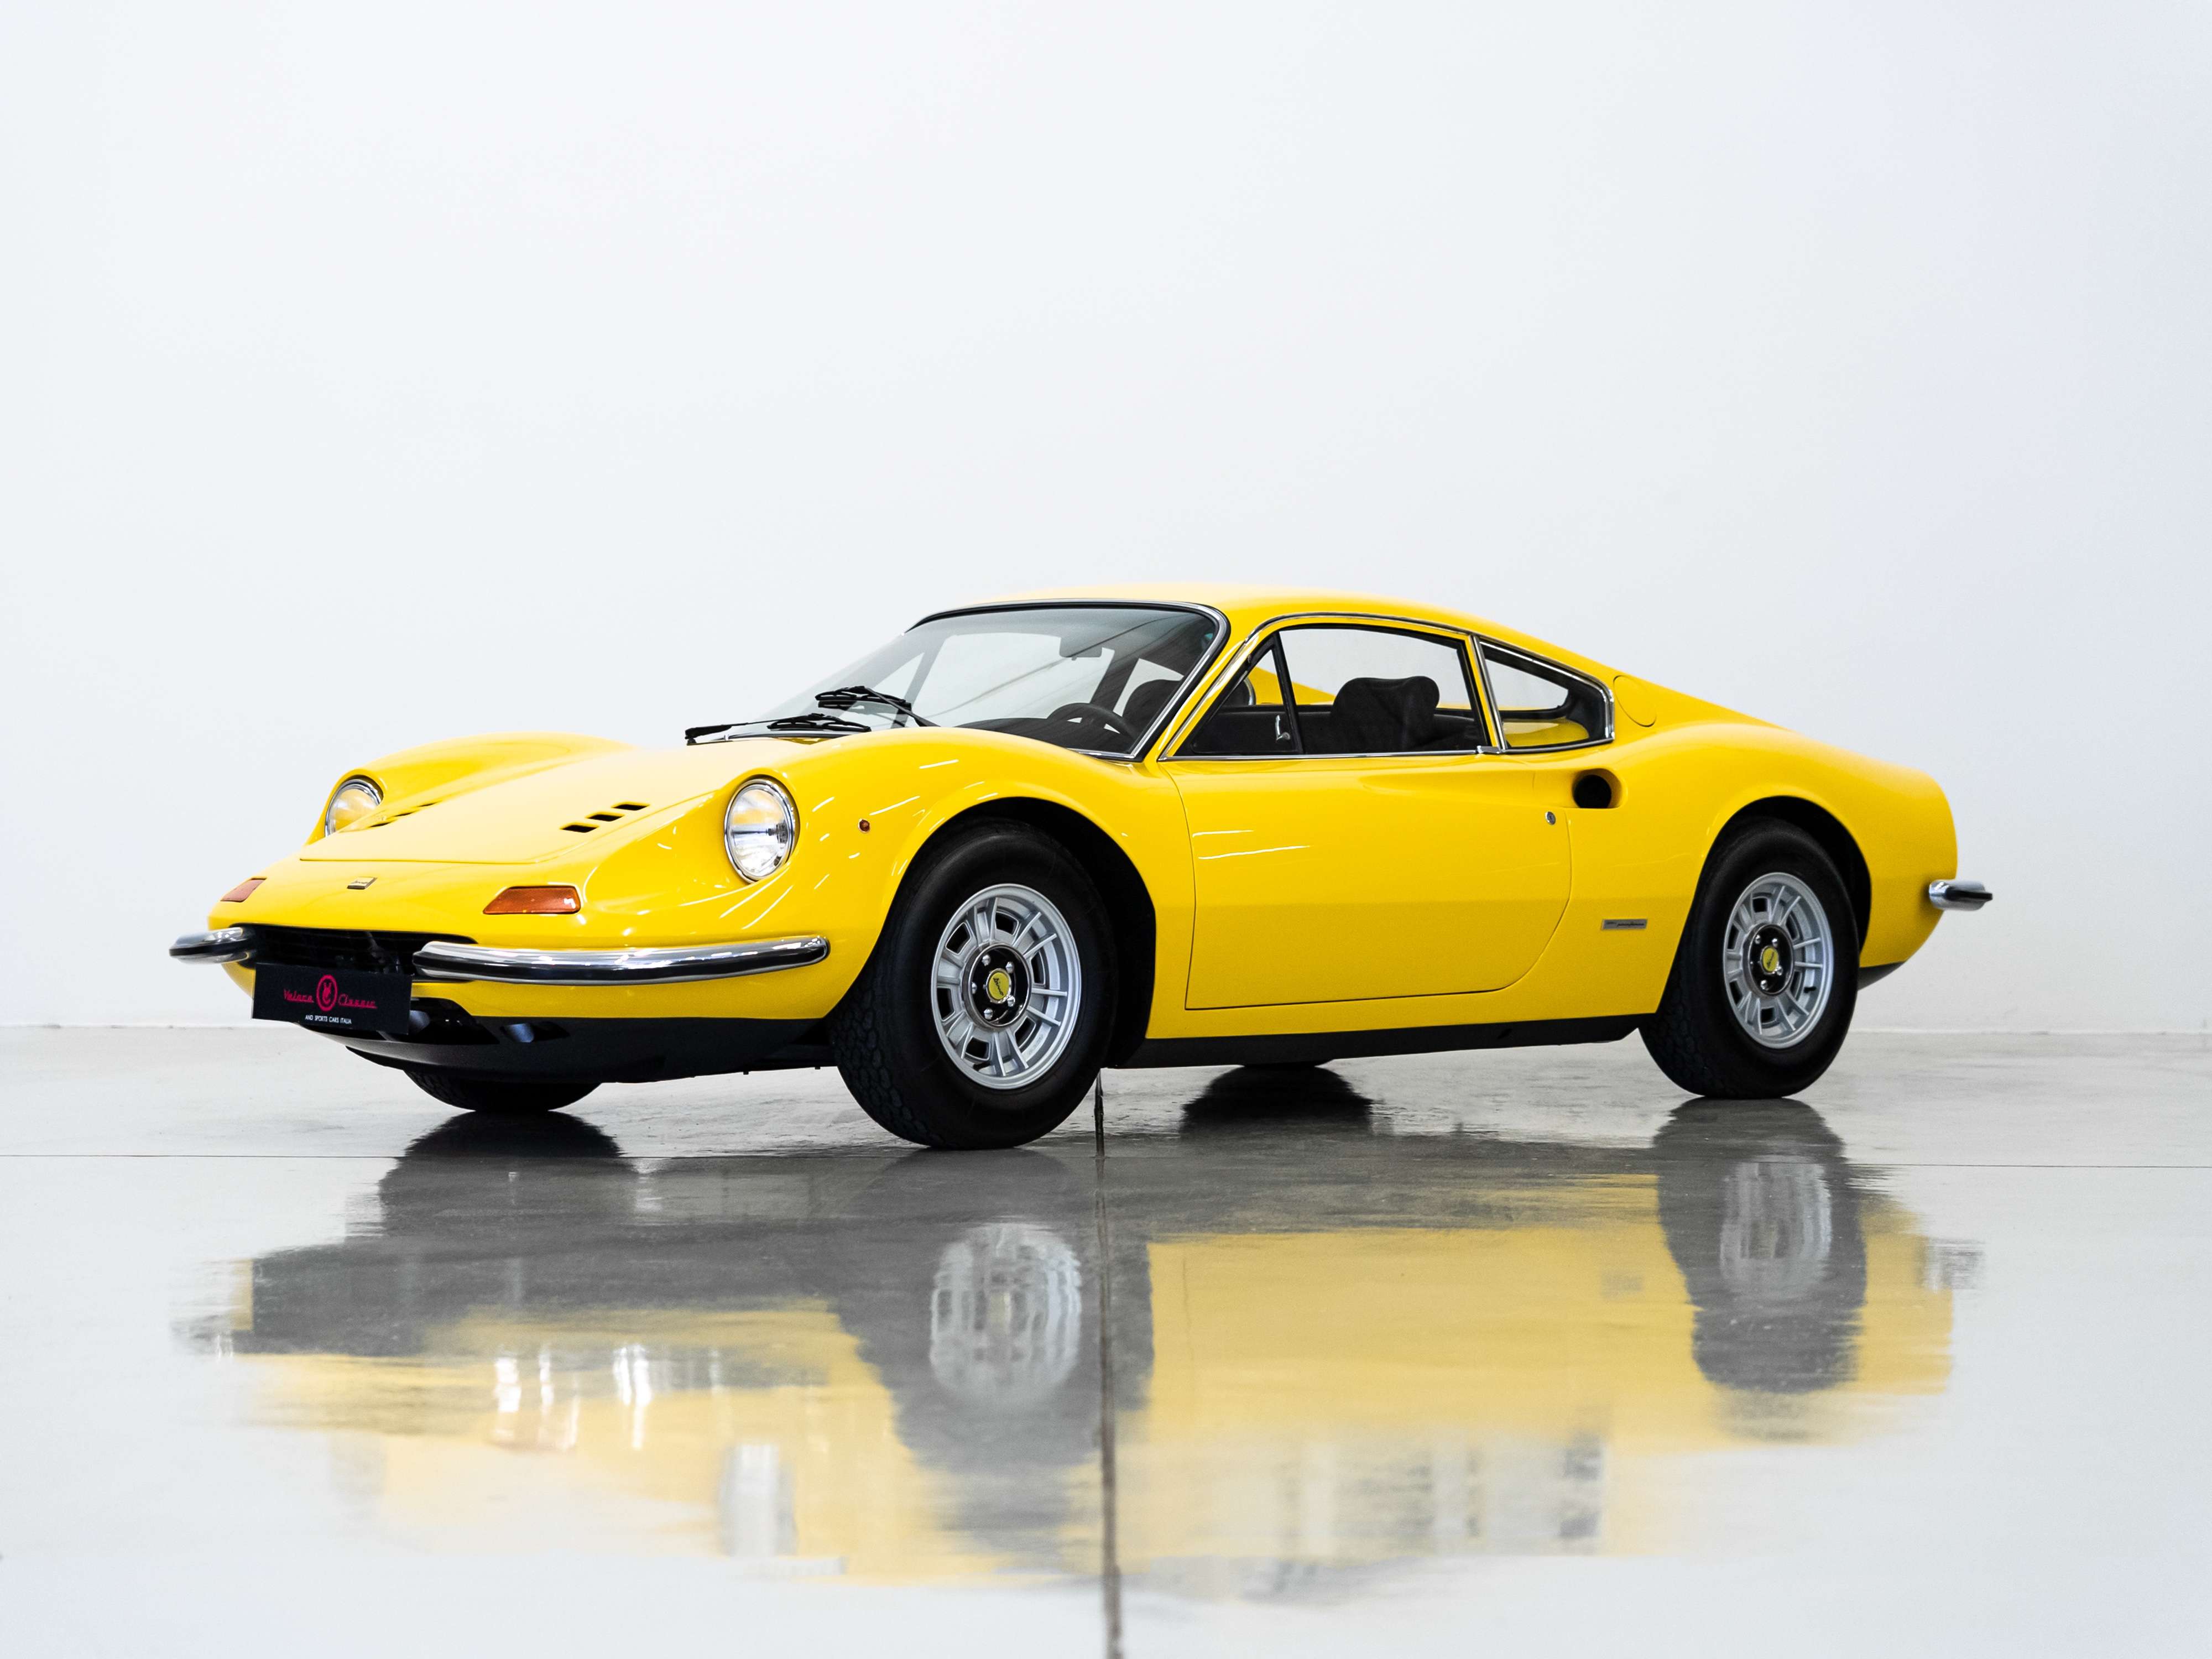 Ferrari 246 Coupe in Yellow used in Veggiano - Padova - PD for € 650,000.-